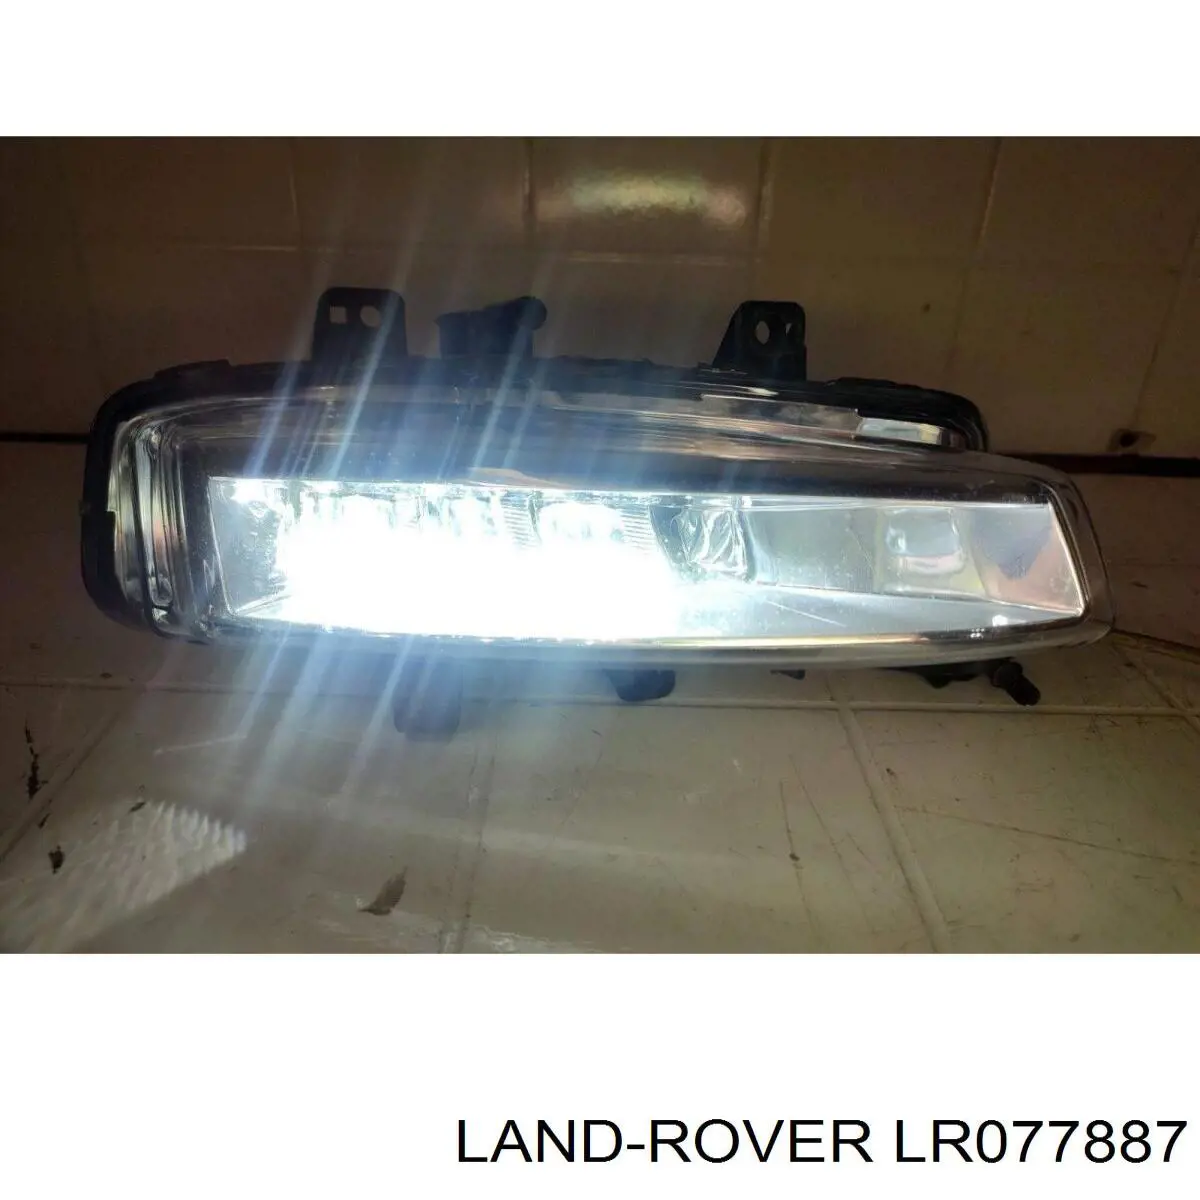 LR077887 Land Rover